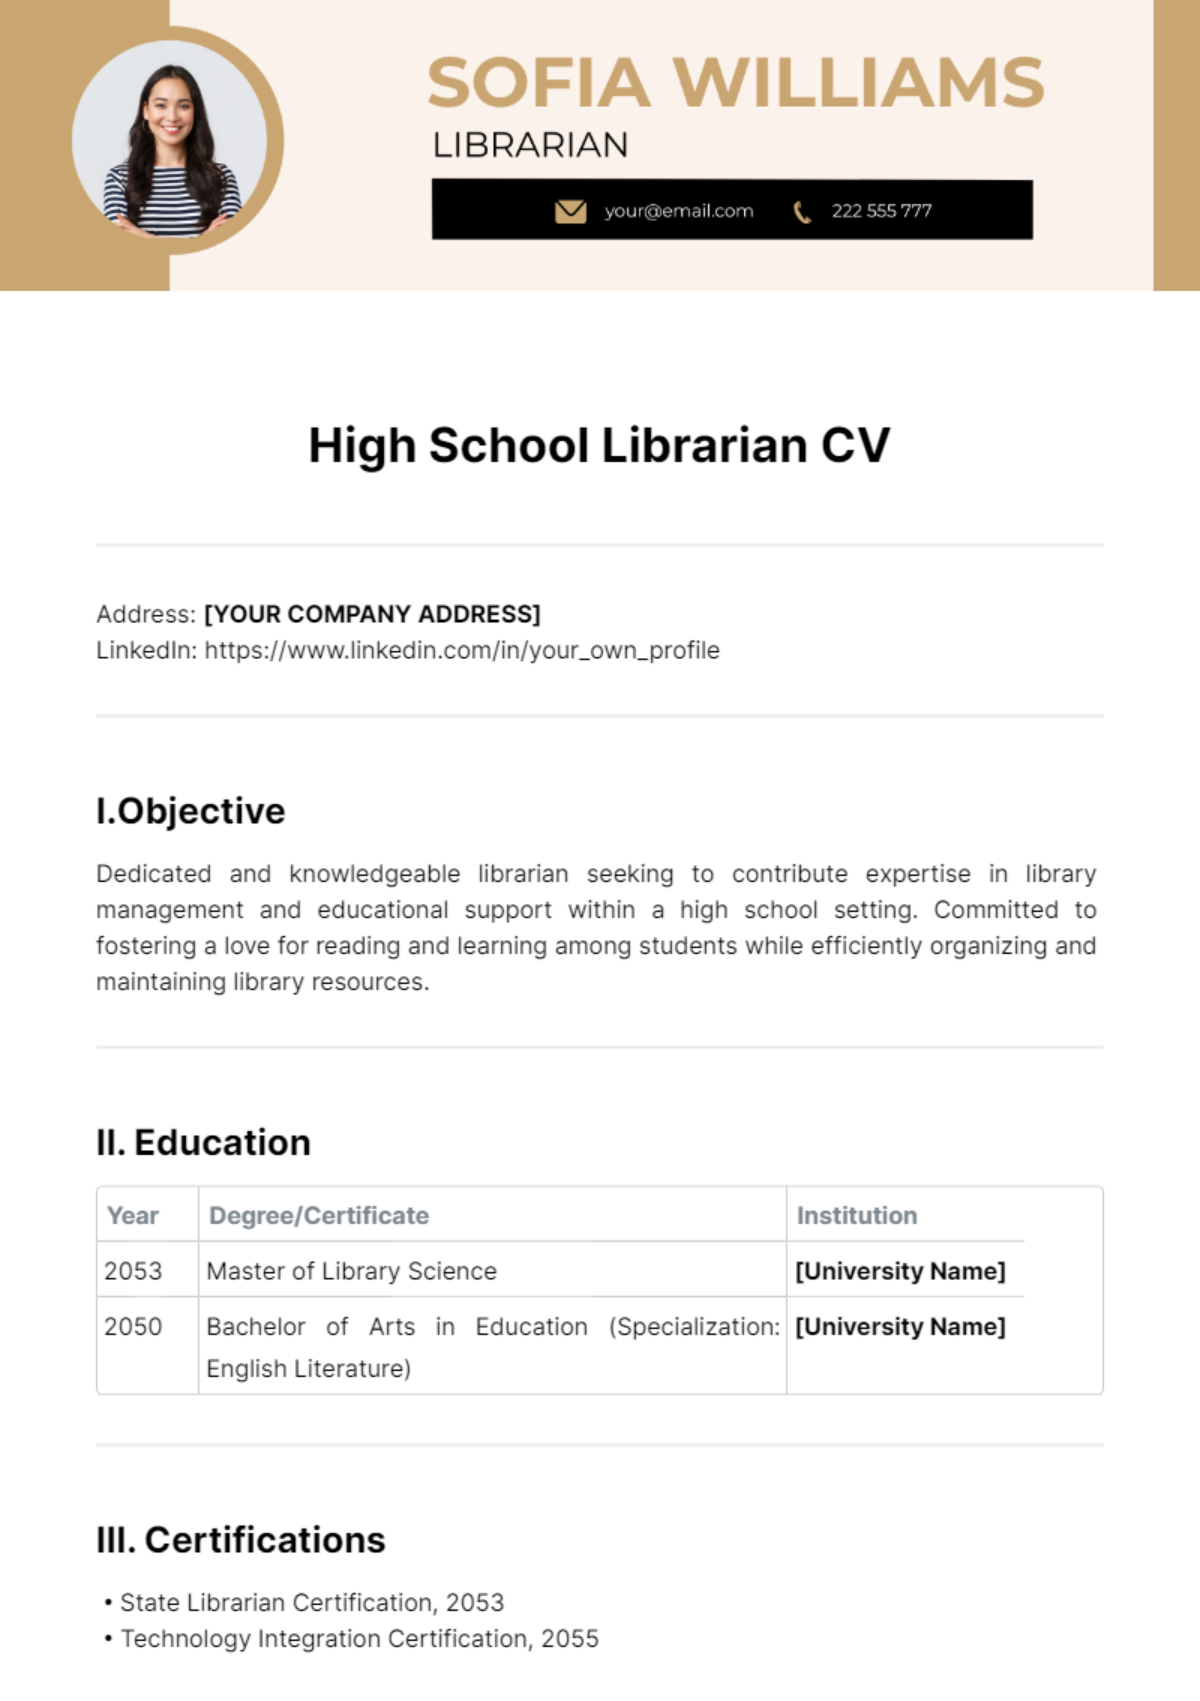 High School Librarian CV Template